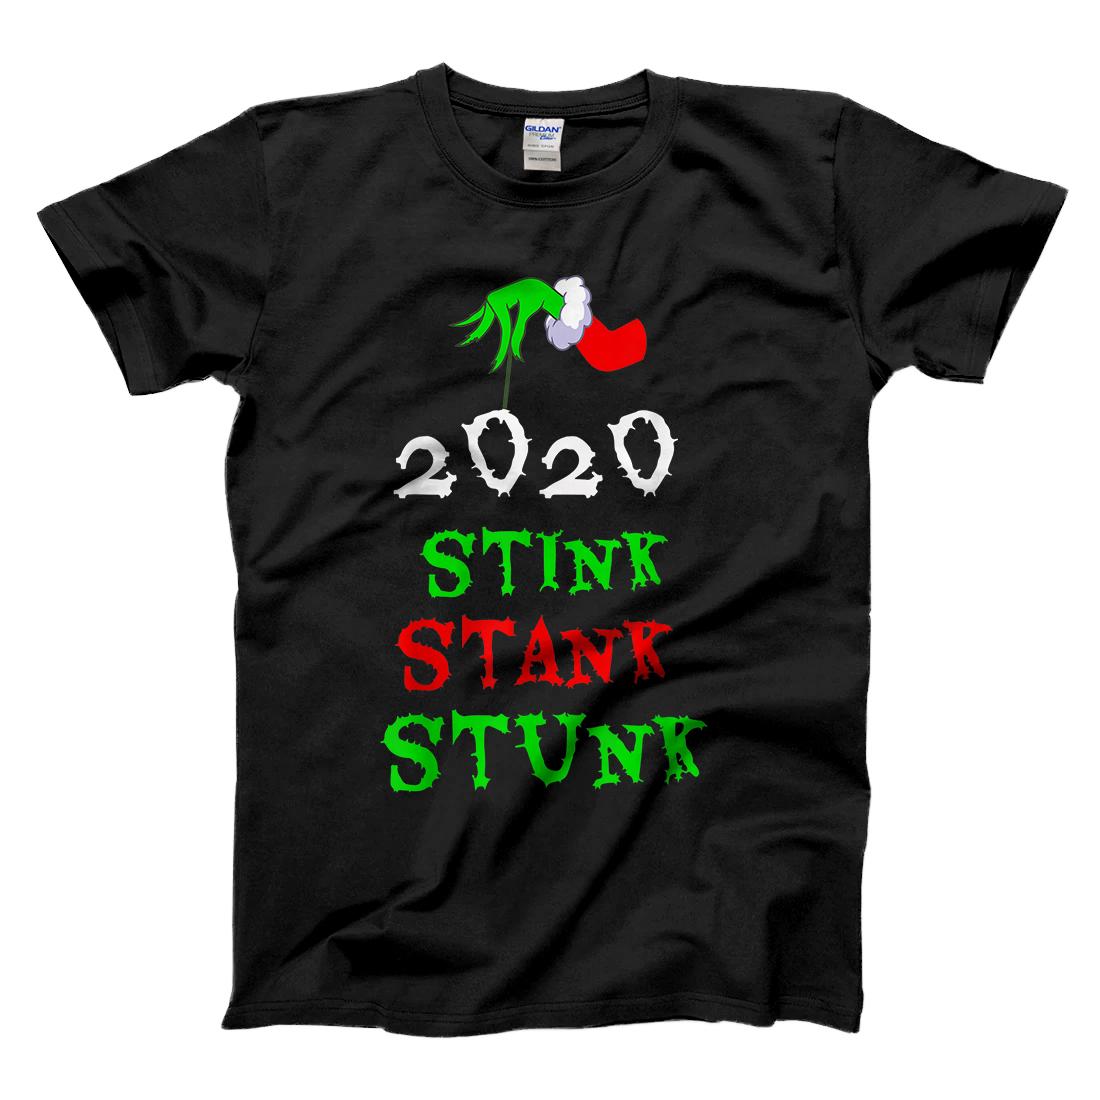 Personalized Funny G.rinch 2020 Stink Stank Stunk Shirt Christmas Holiday T-Shirt